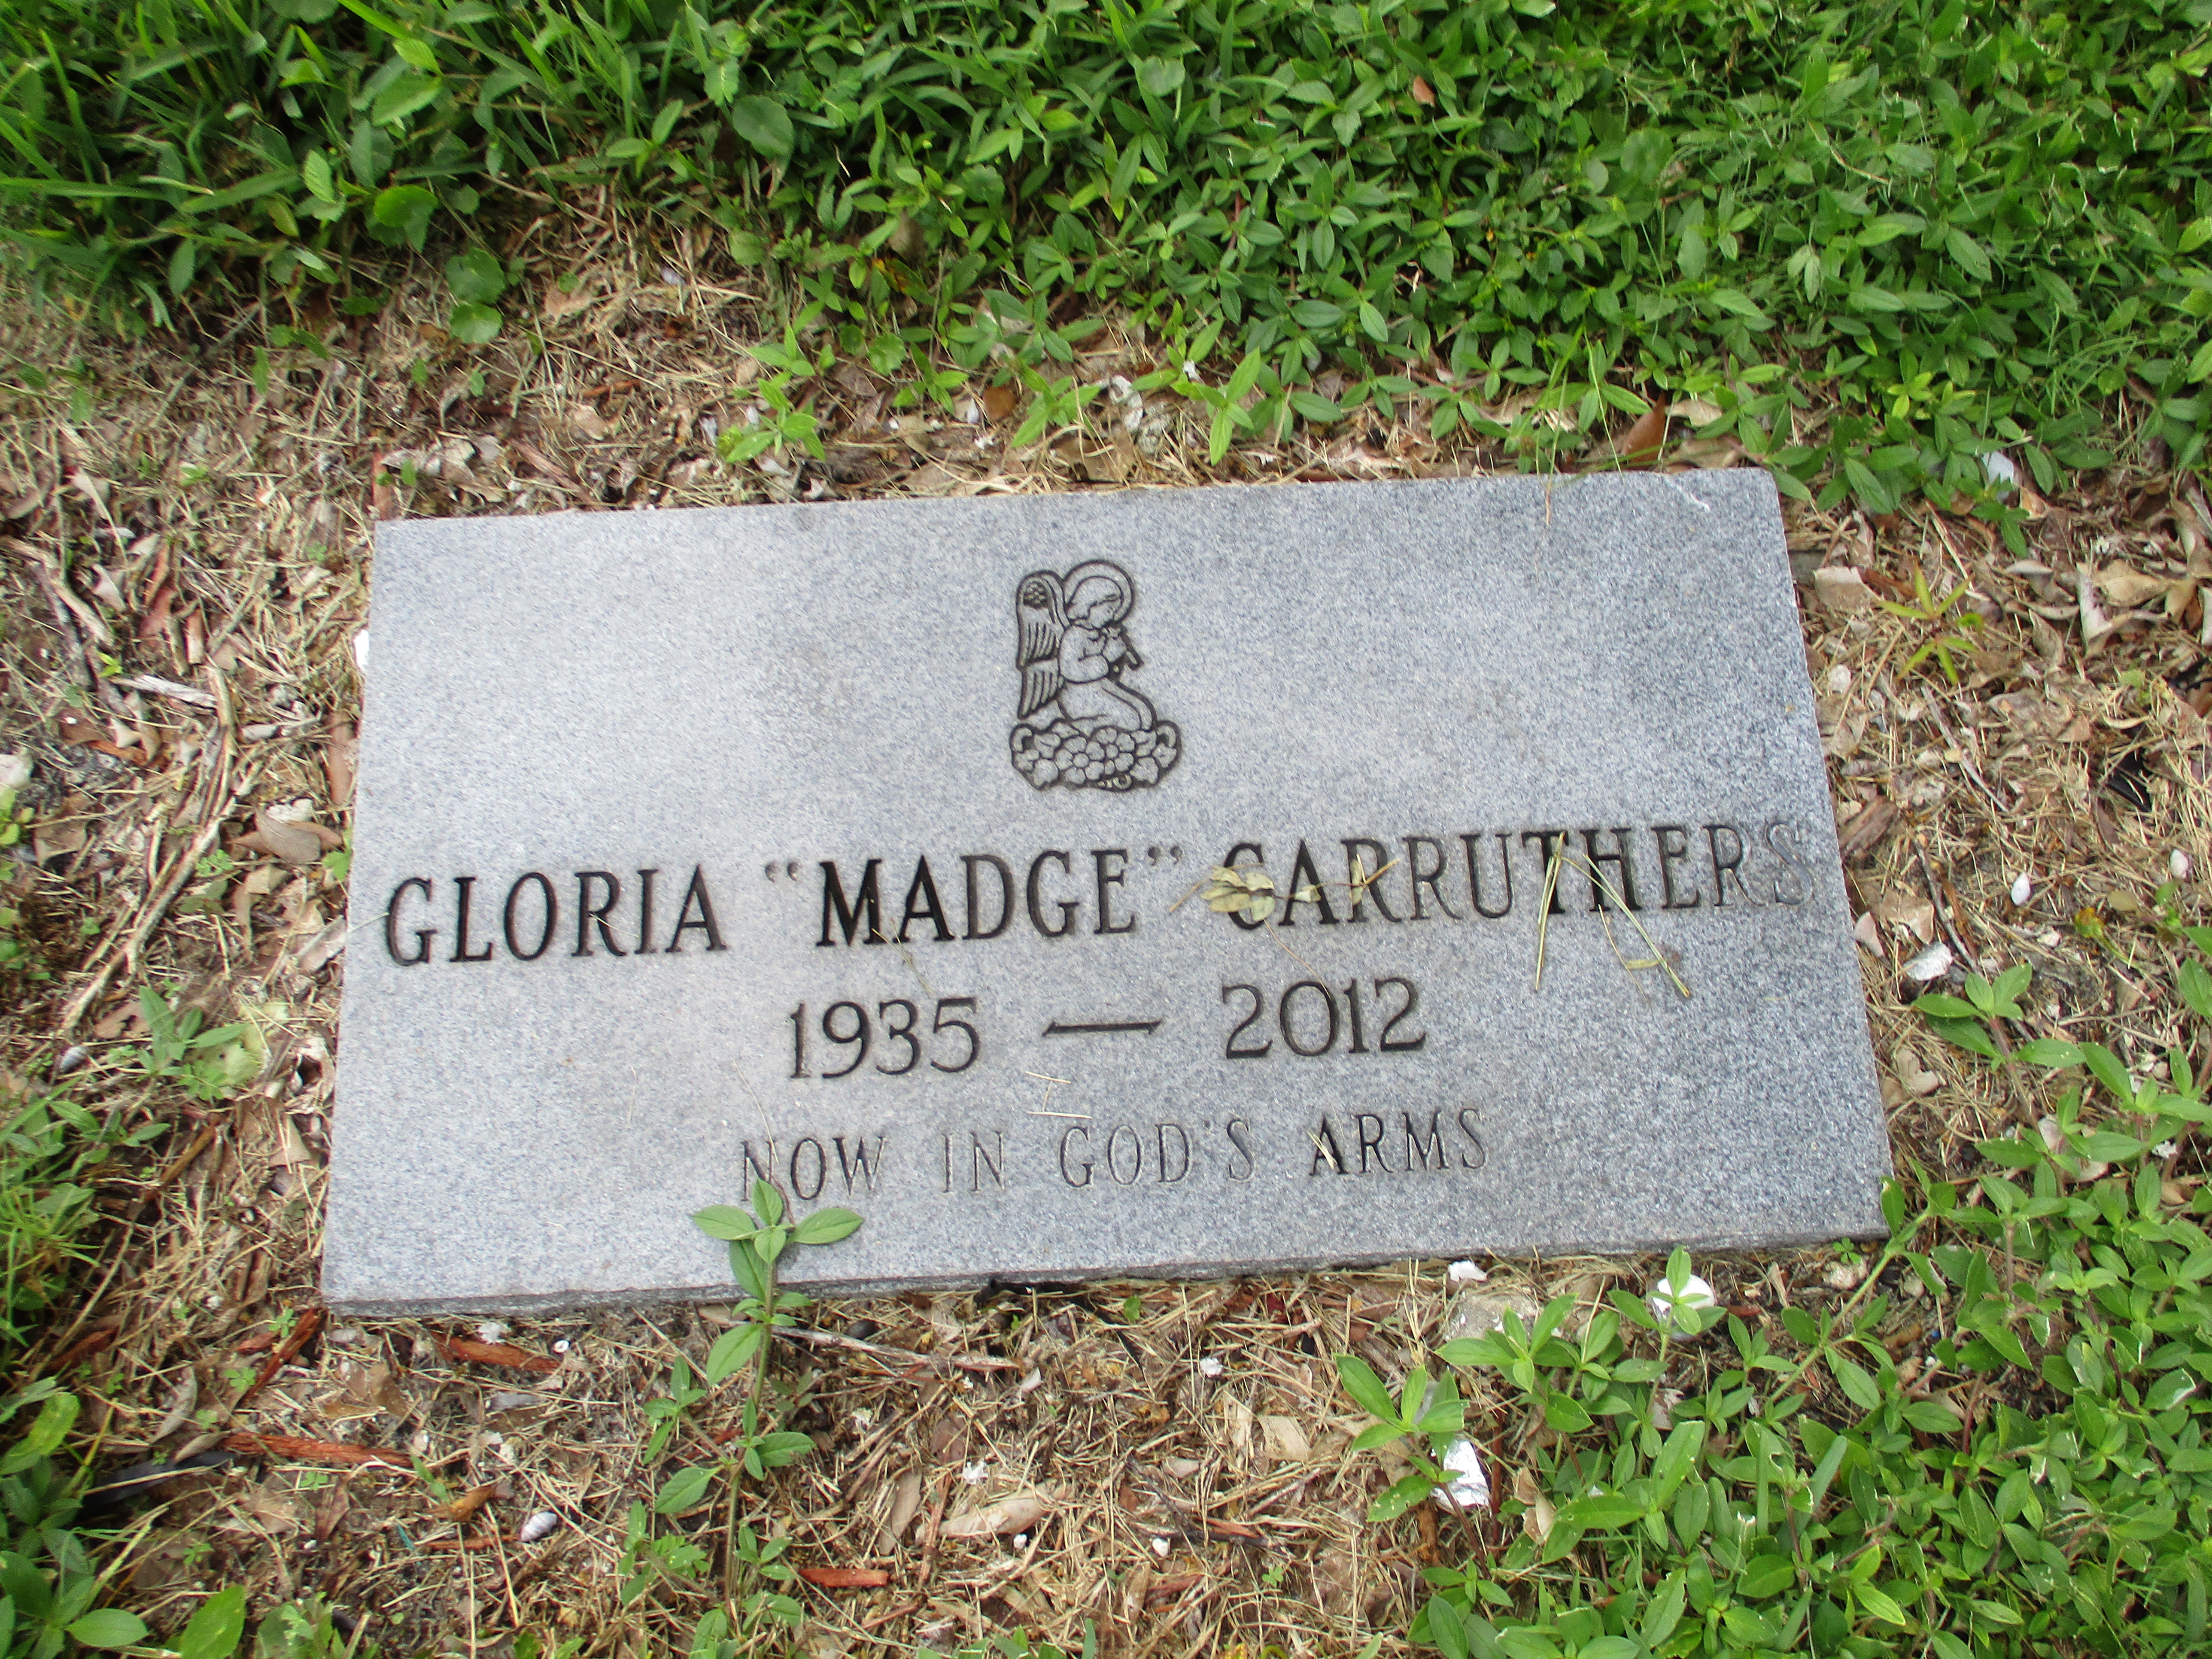 Gloria "Madge" Carruthers